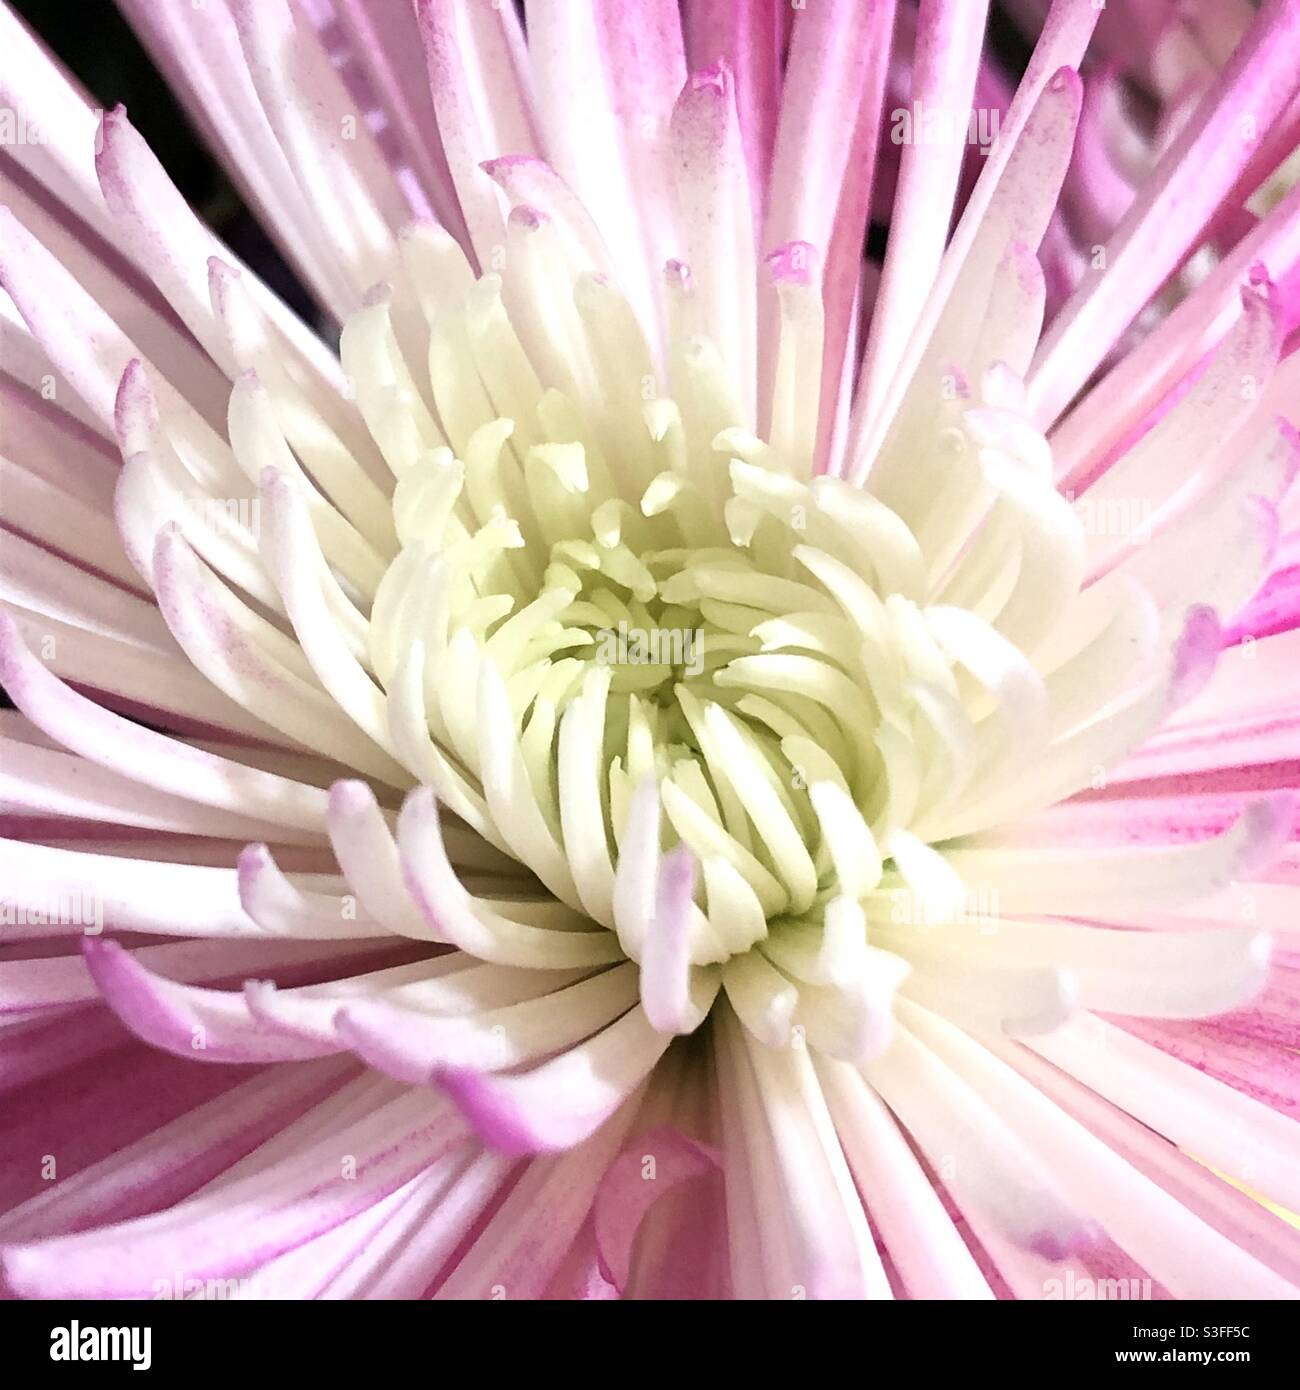 Spider chrysanthemum detail. Stock Photo